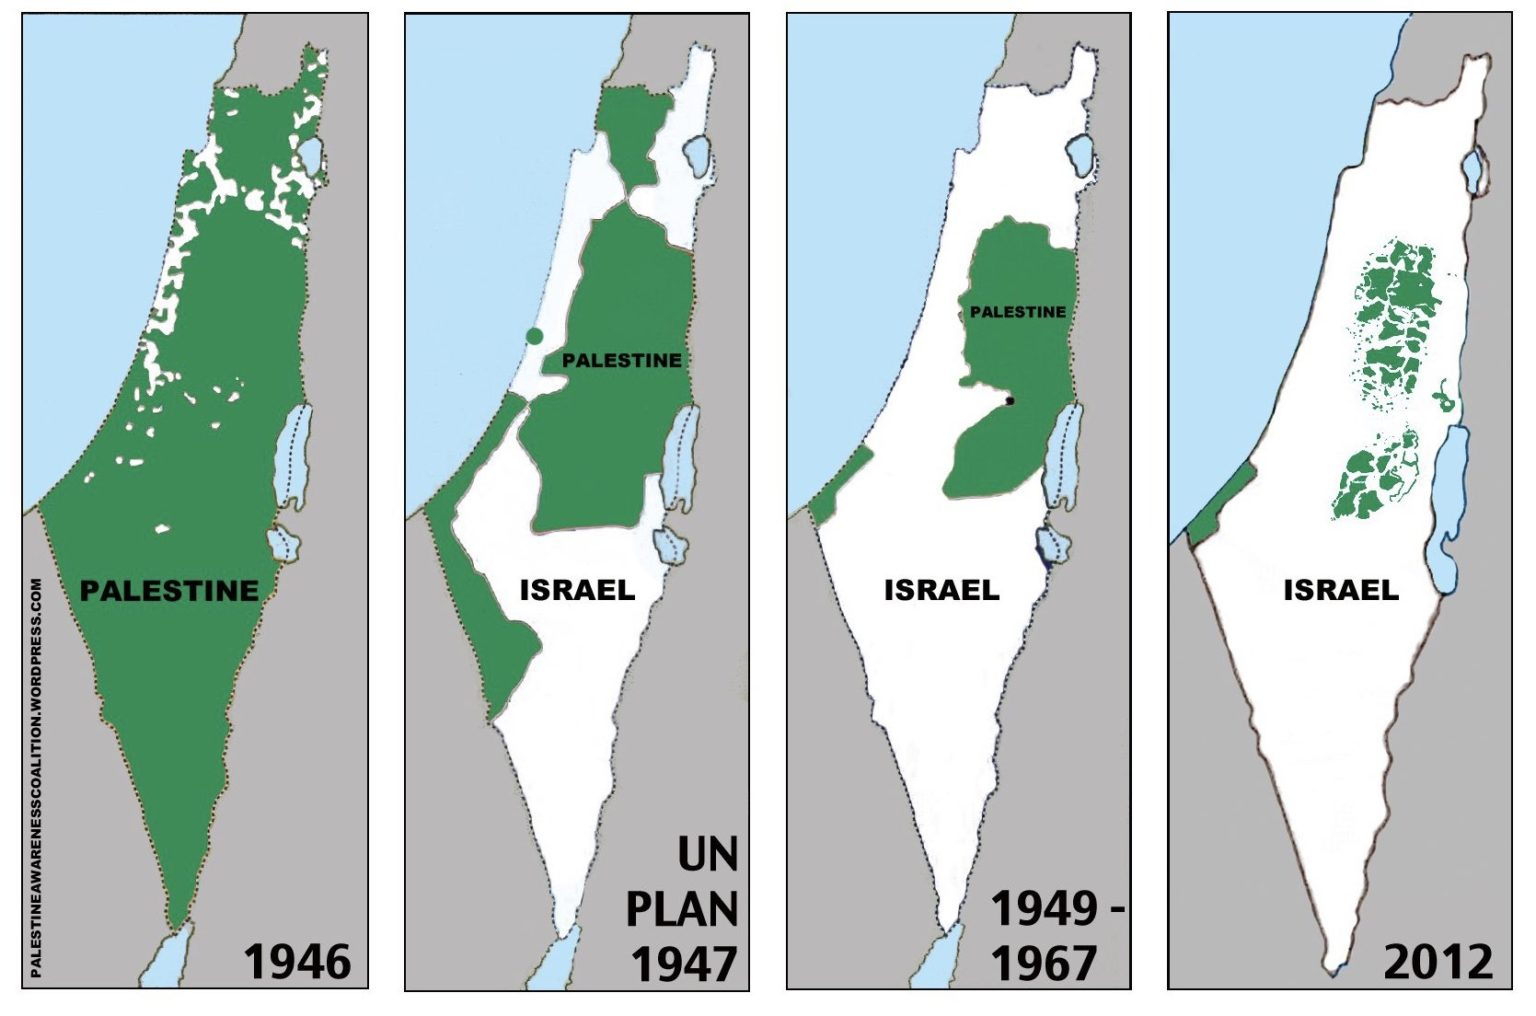 Israel occupying Palestine since WW-II